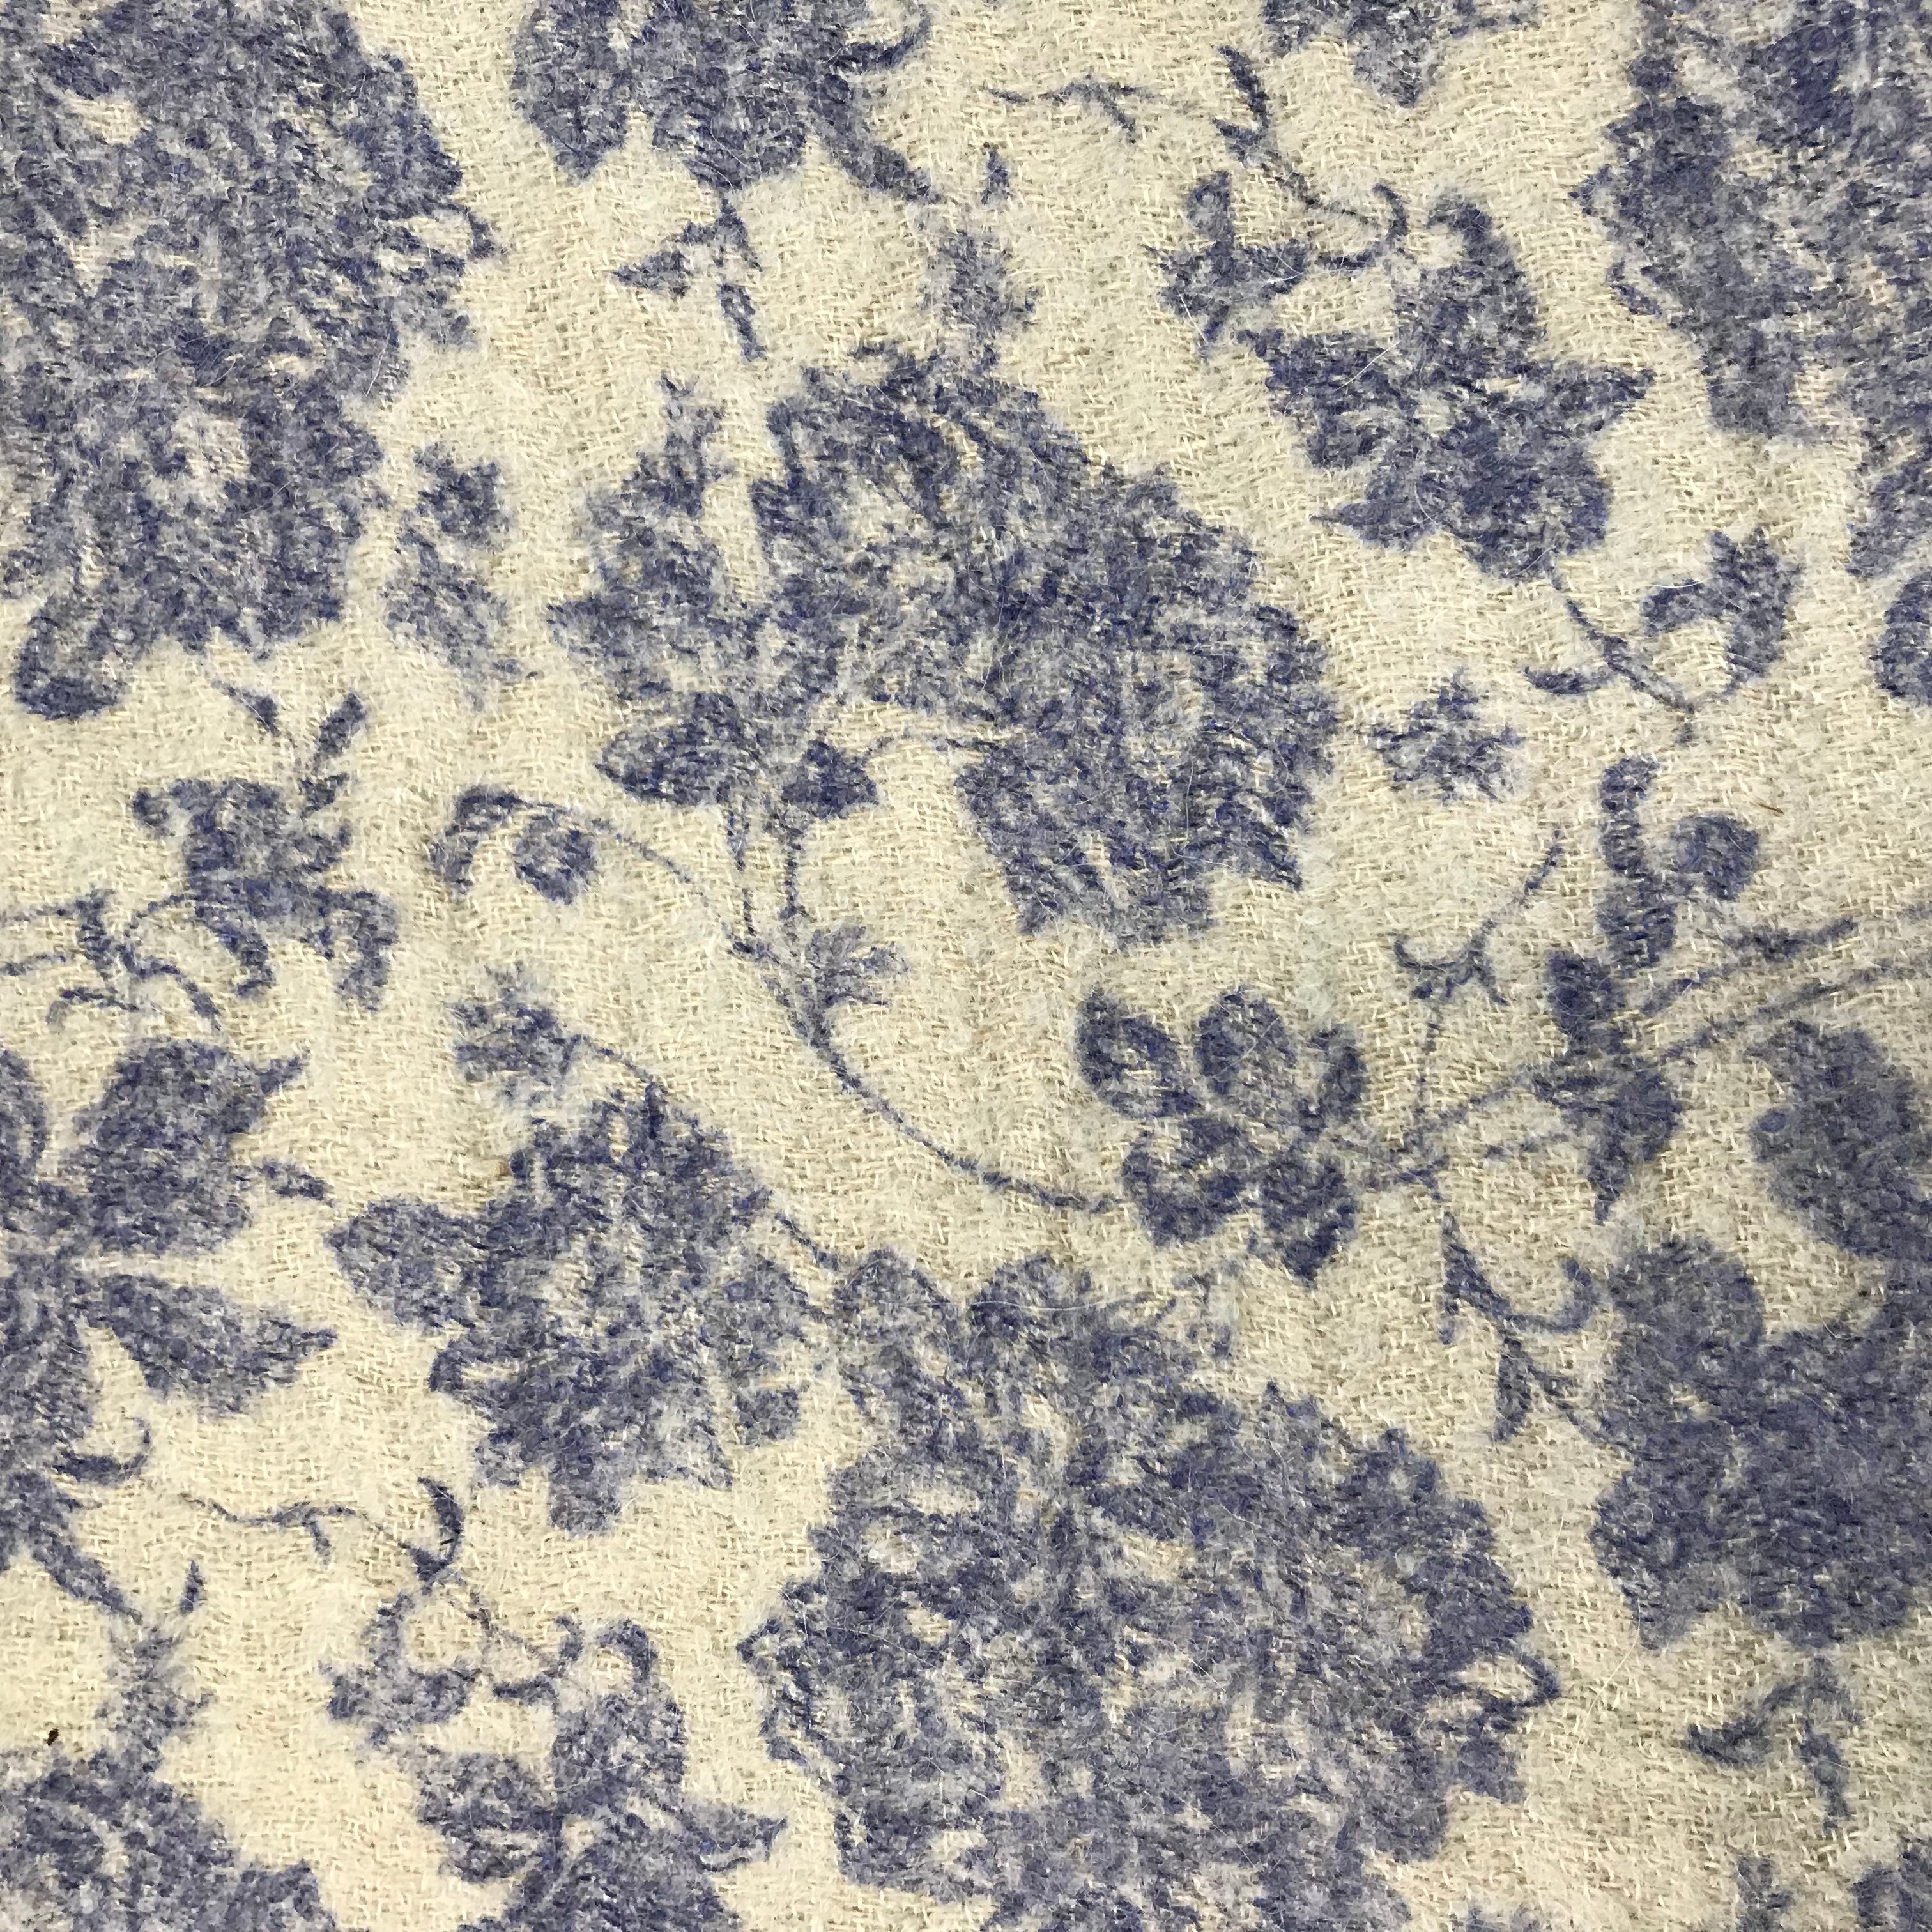 Italian Floral Printed Wool Boucle - Navy/Light Blue/Beige - Fabrics & Fabrics